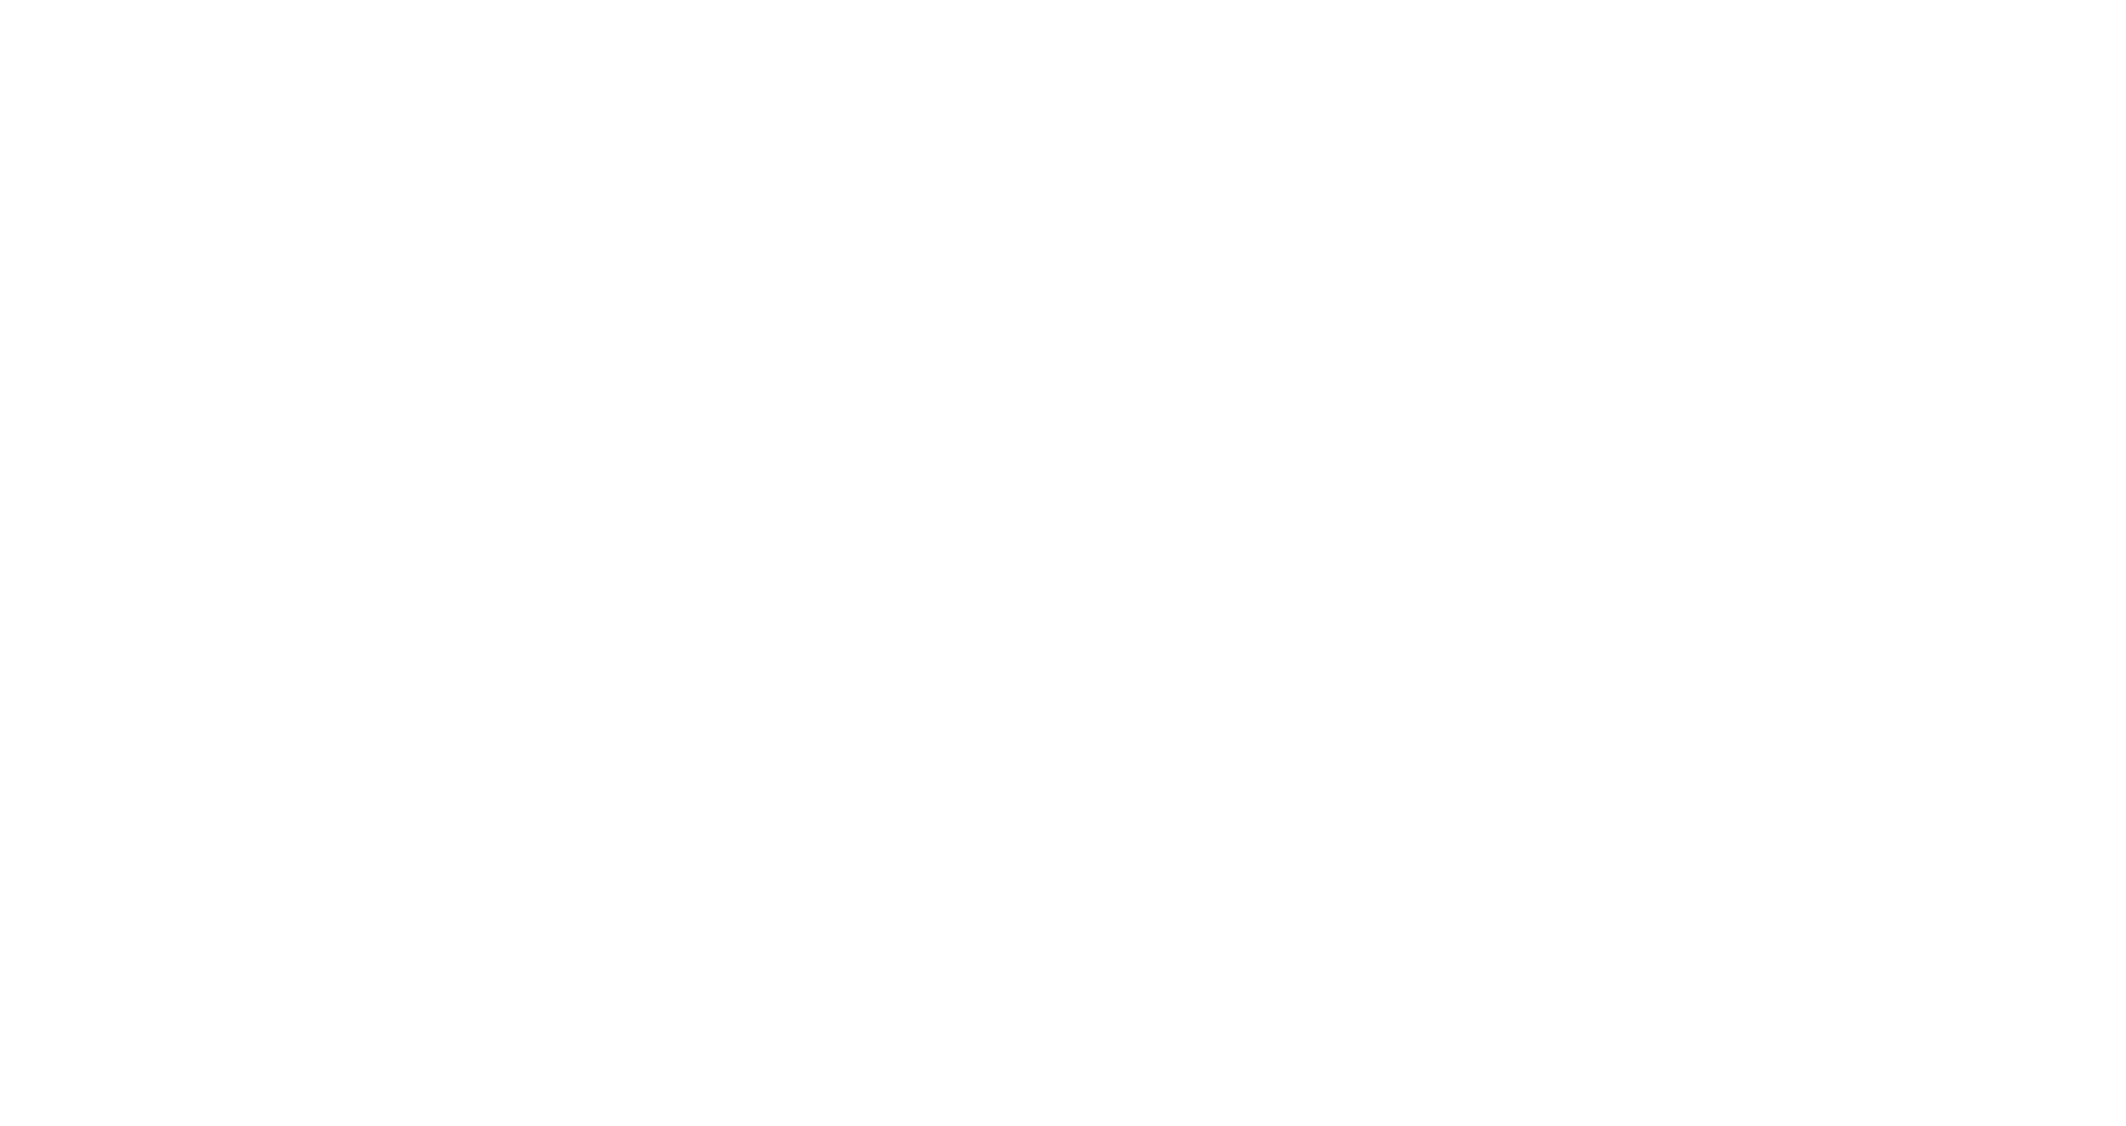 Drillinginfo